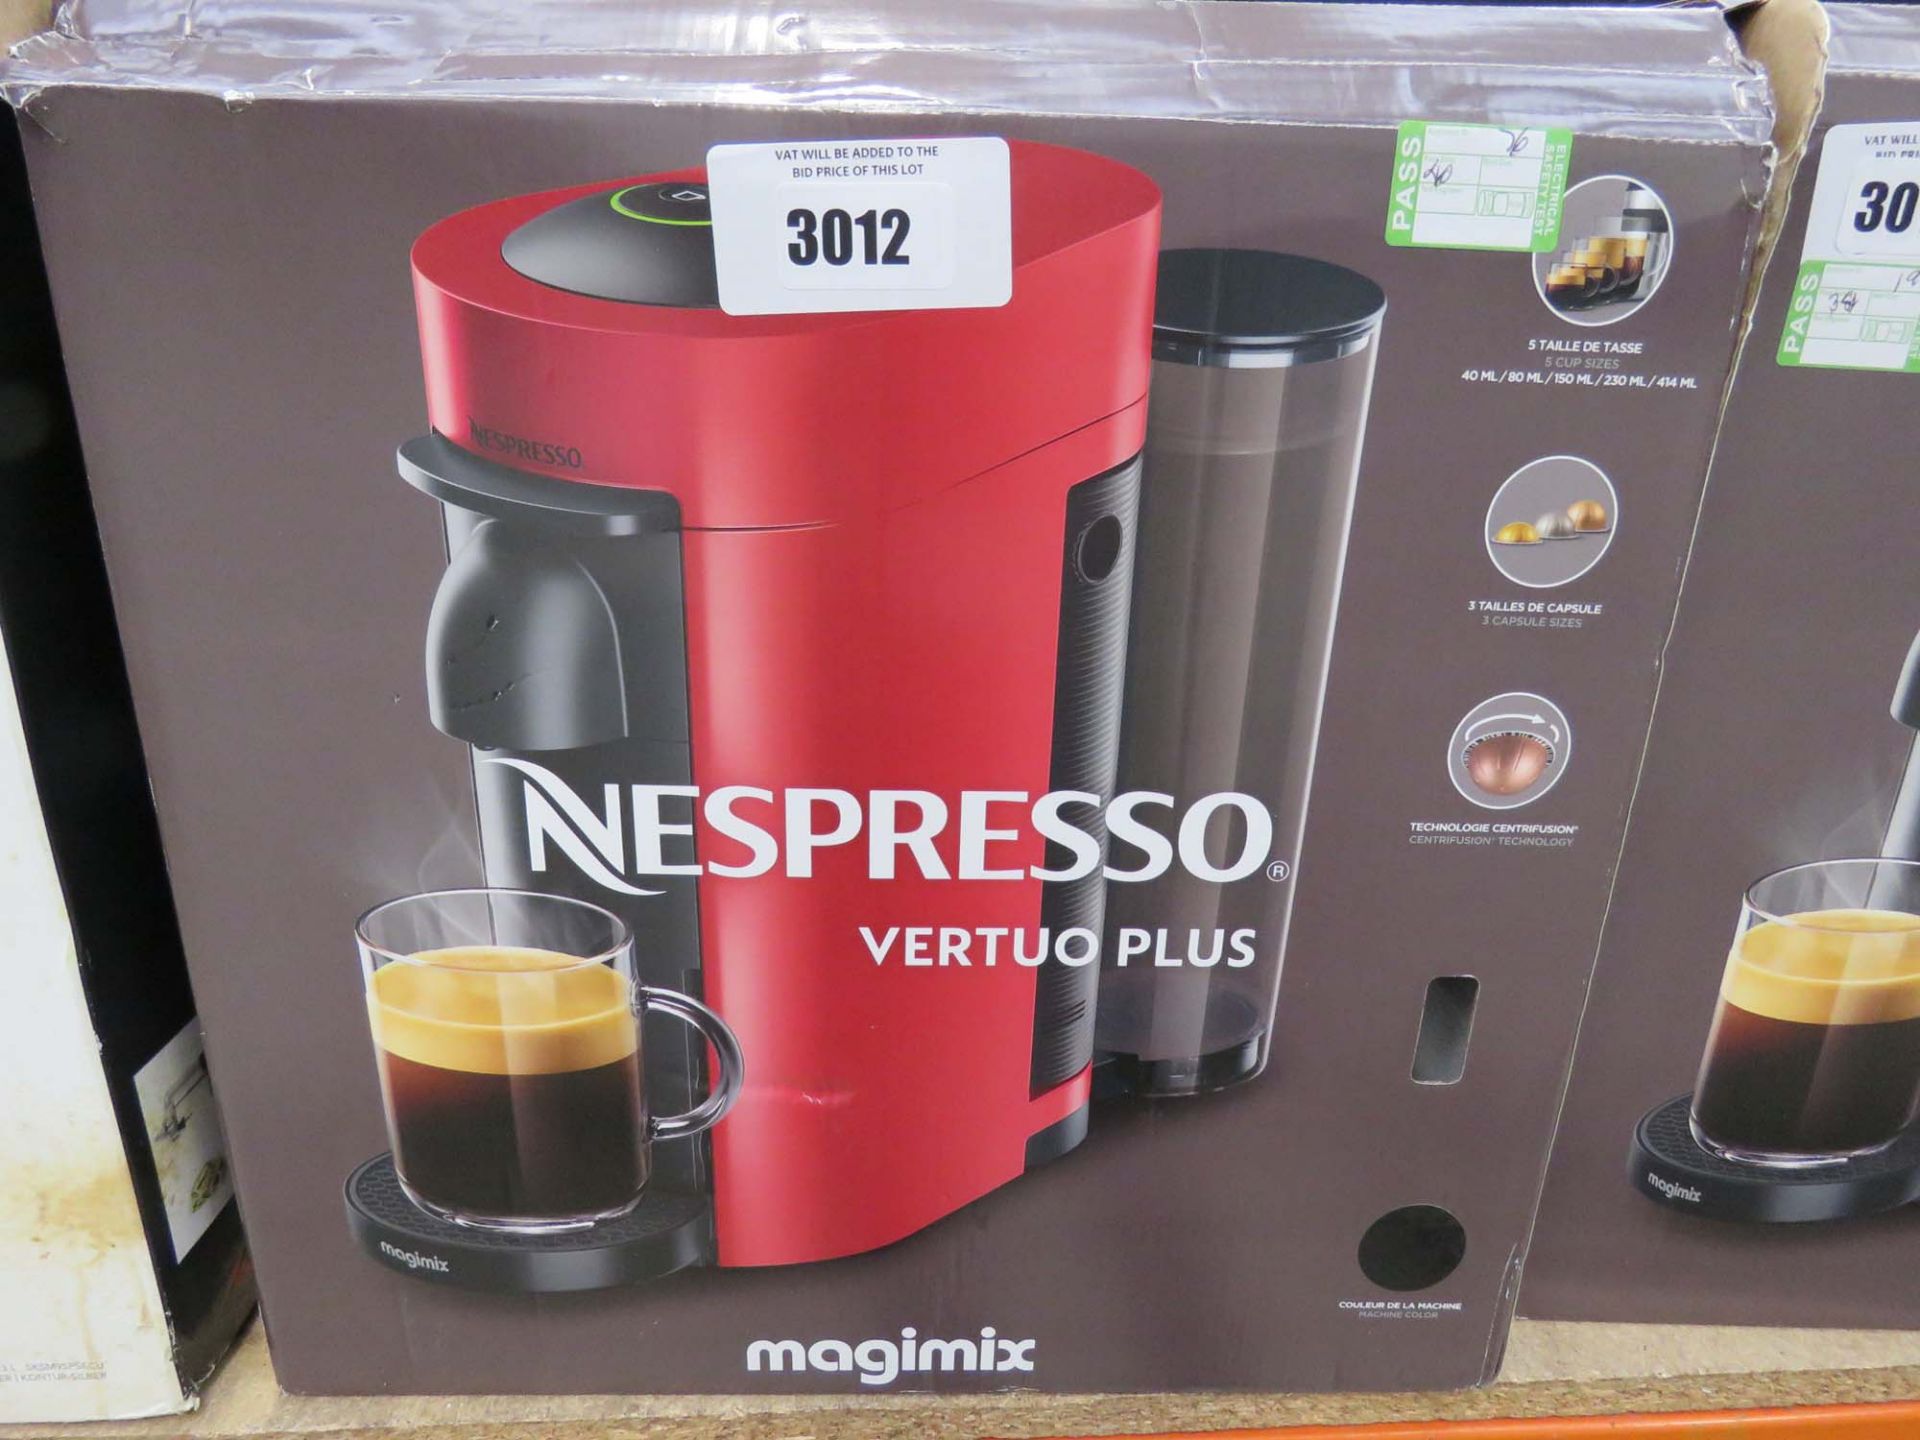 Magimix Nespresso Virtuo Plus coffee machine